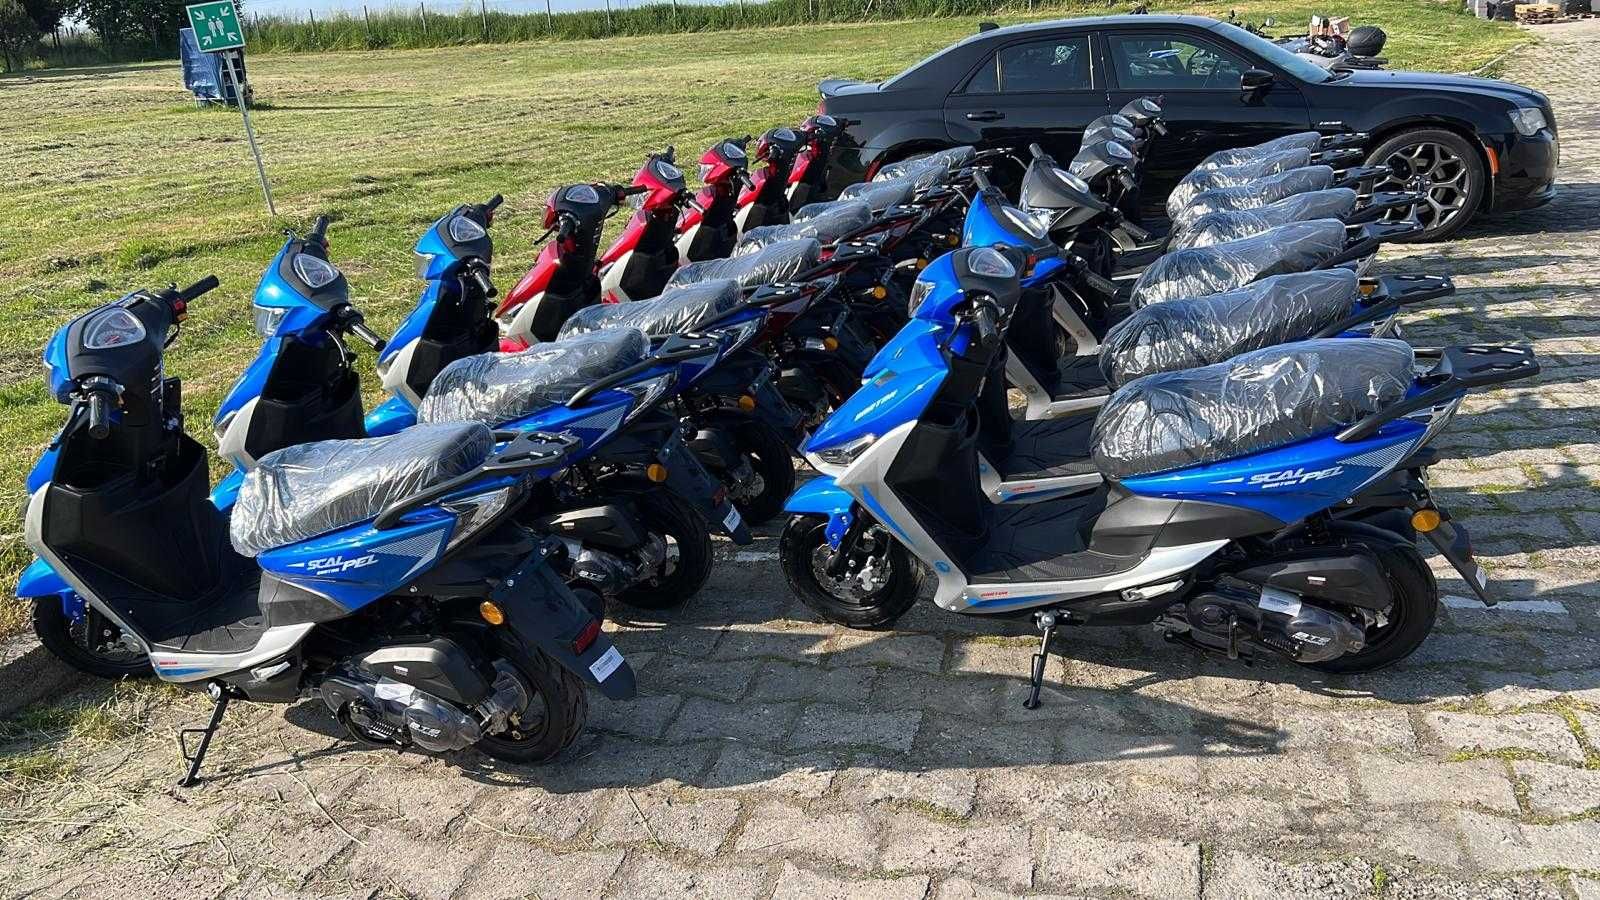 Inchiriere scuter Rent scooter Glovo Tazz Bolt livrari delivery